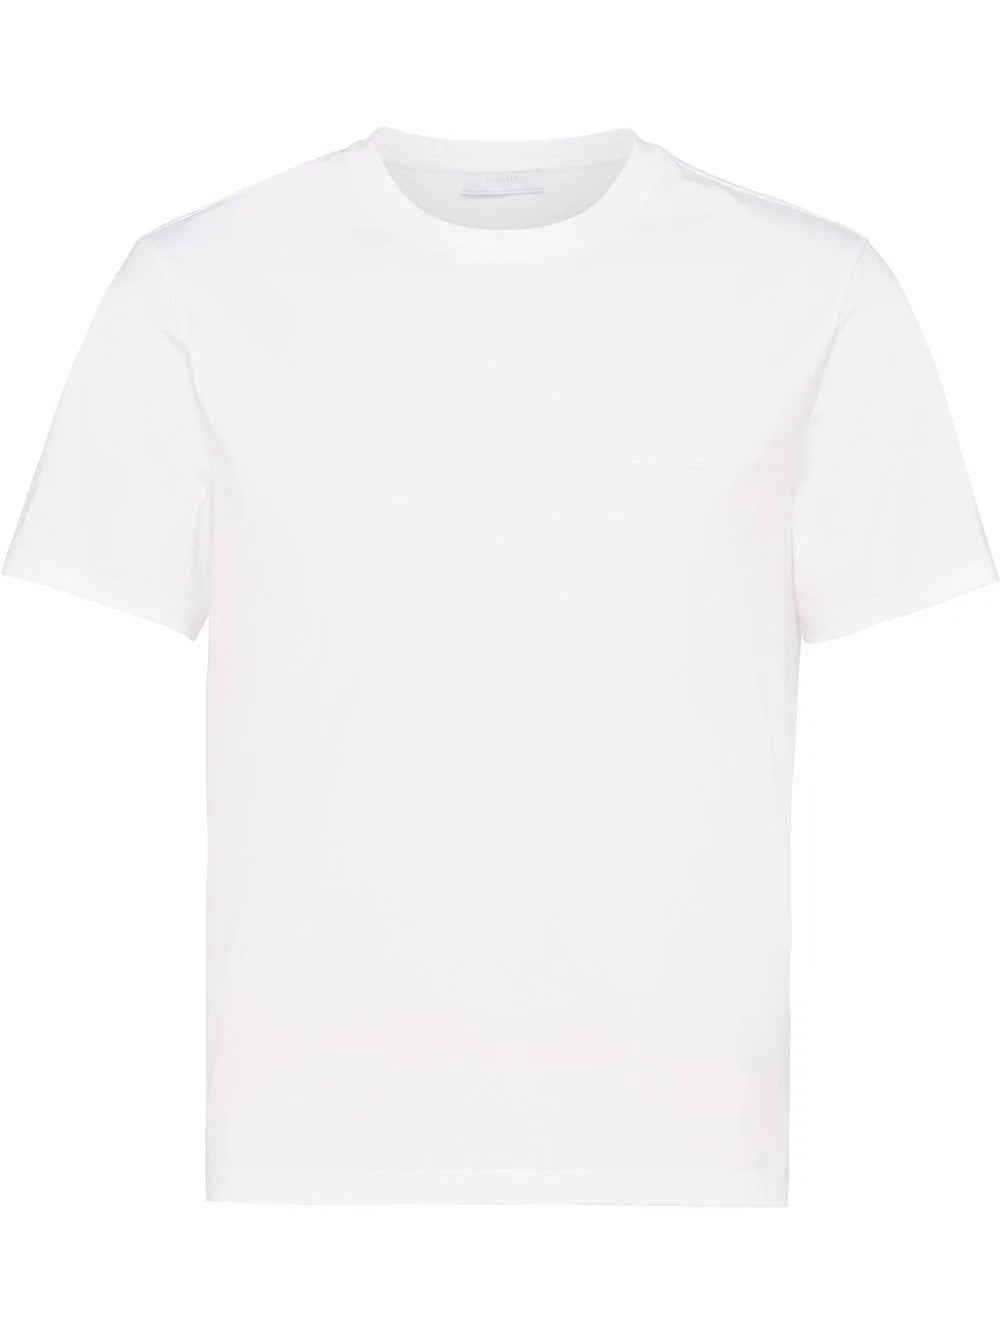 PRADA t-shirt round neck white-0